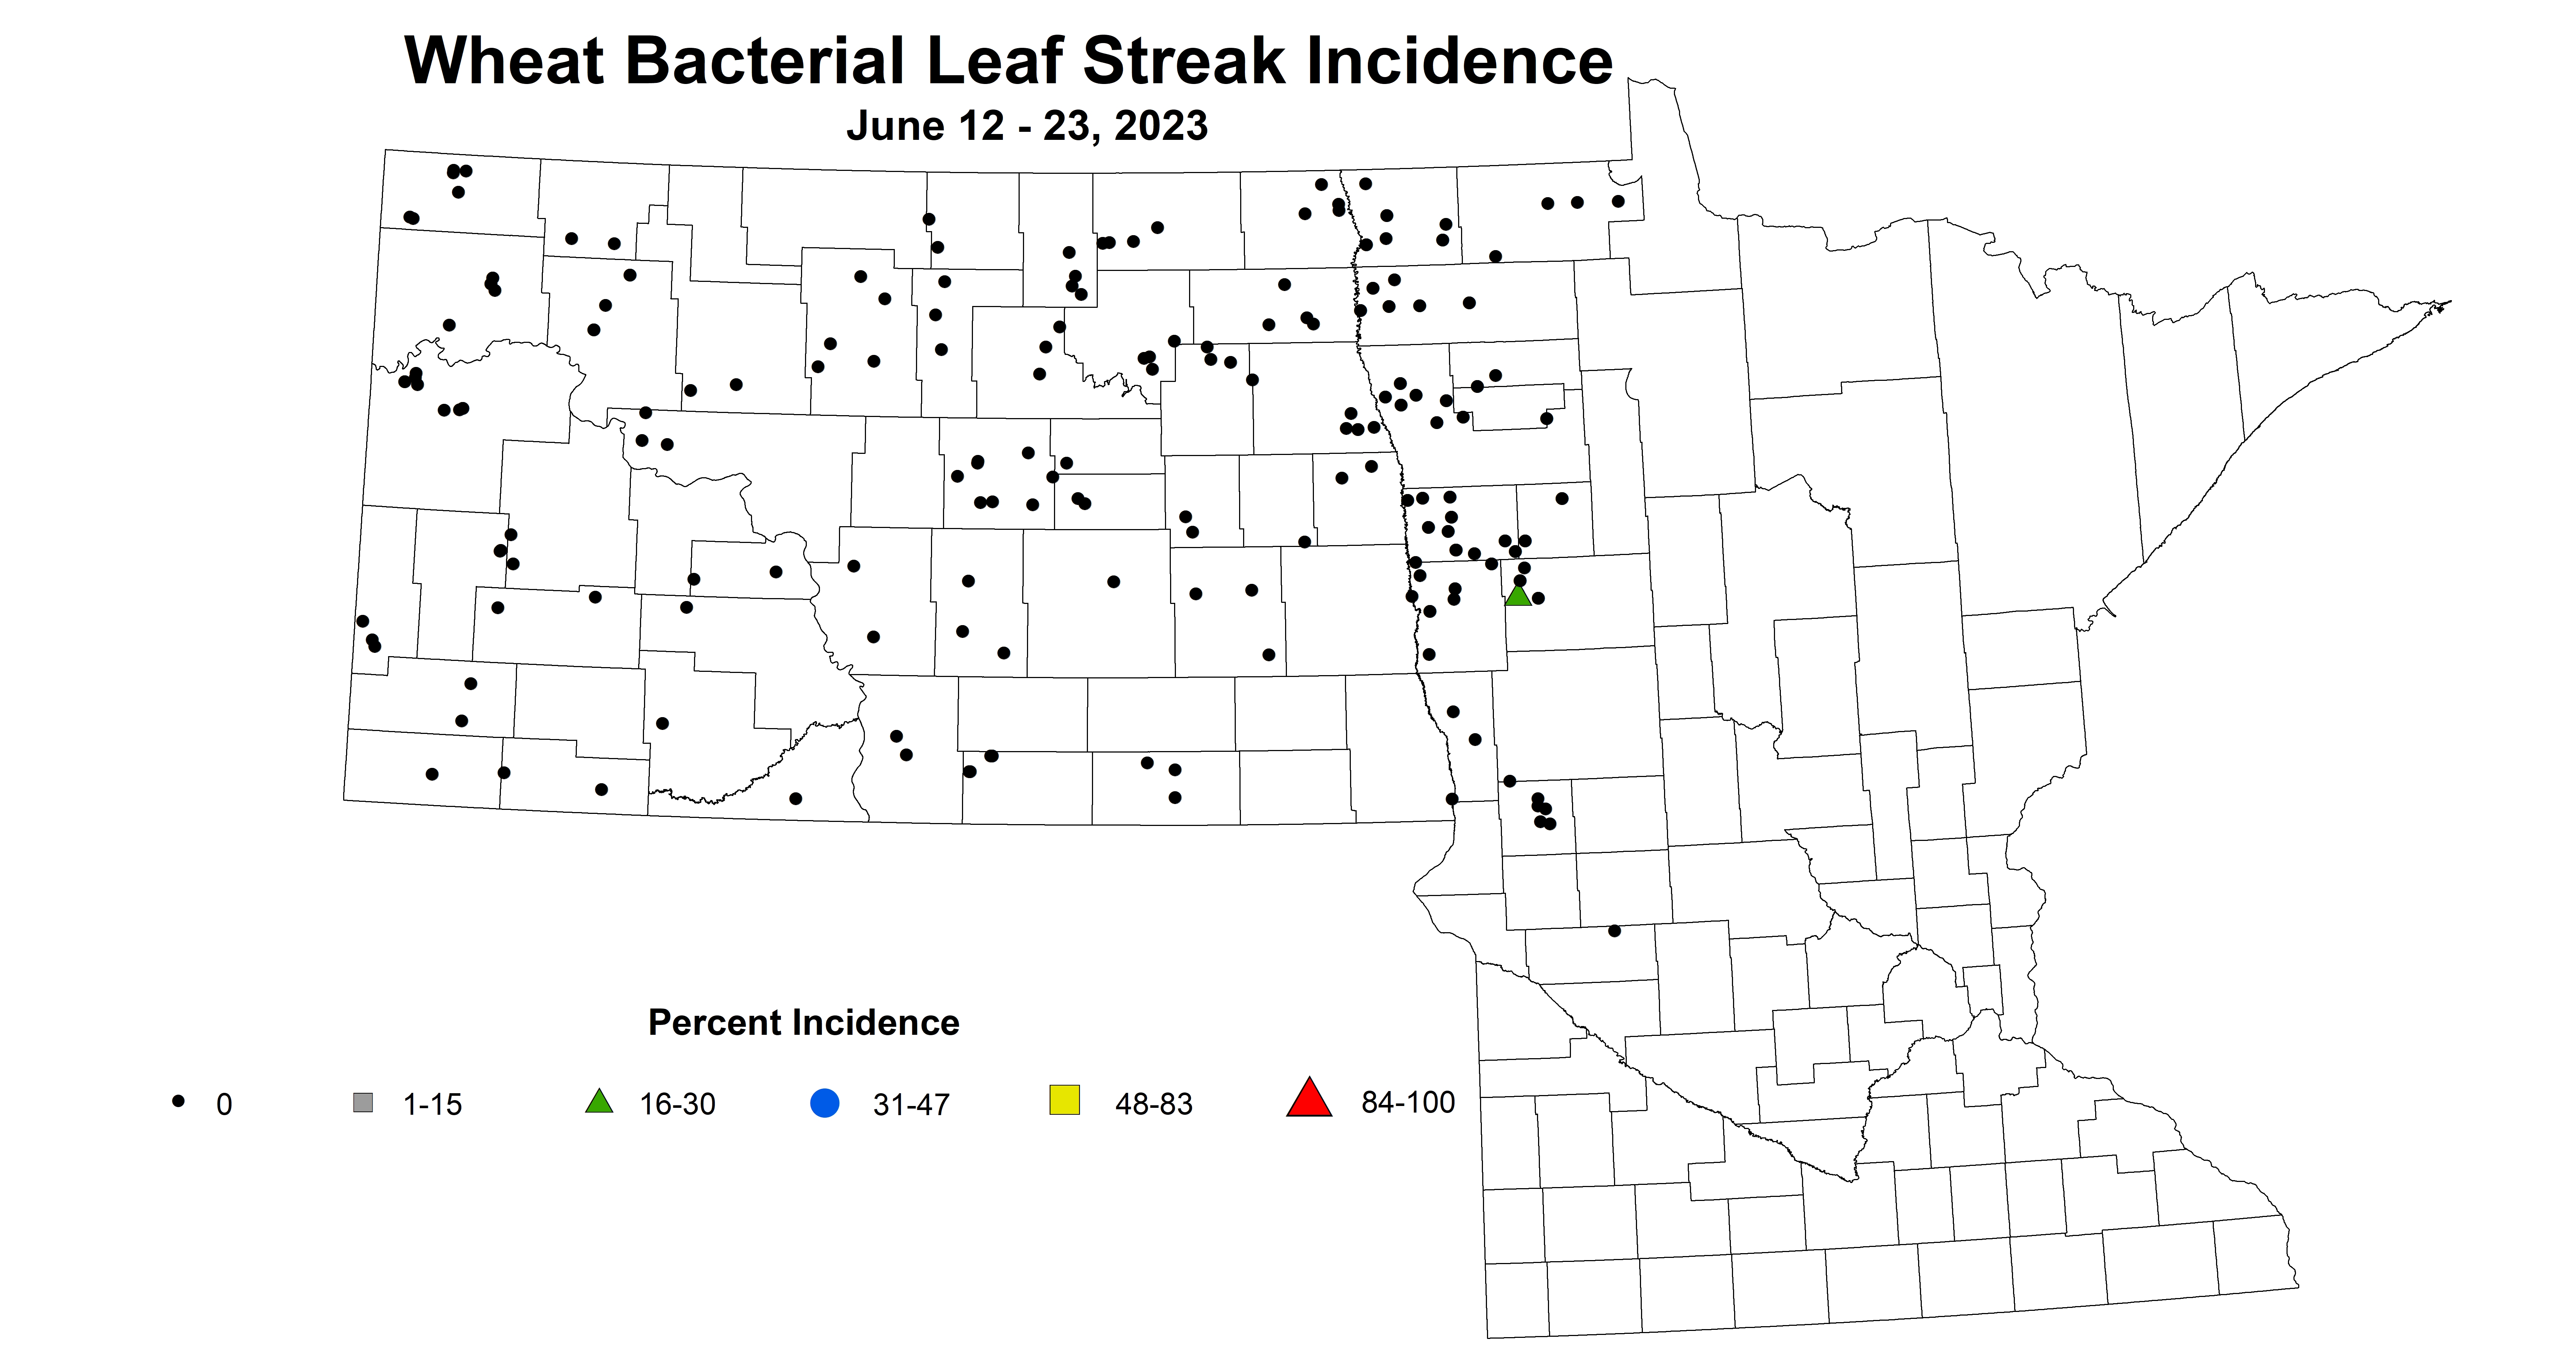 wheat bacterial leaf streak incidence June 12-23 2023 updated